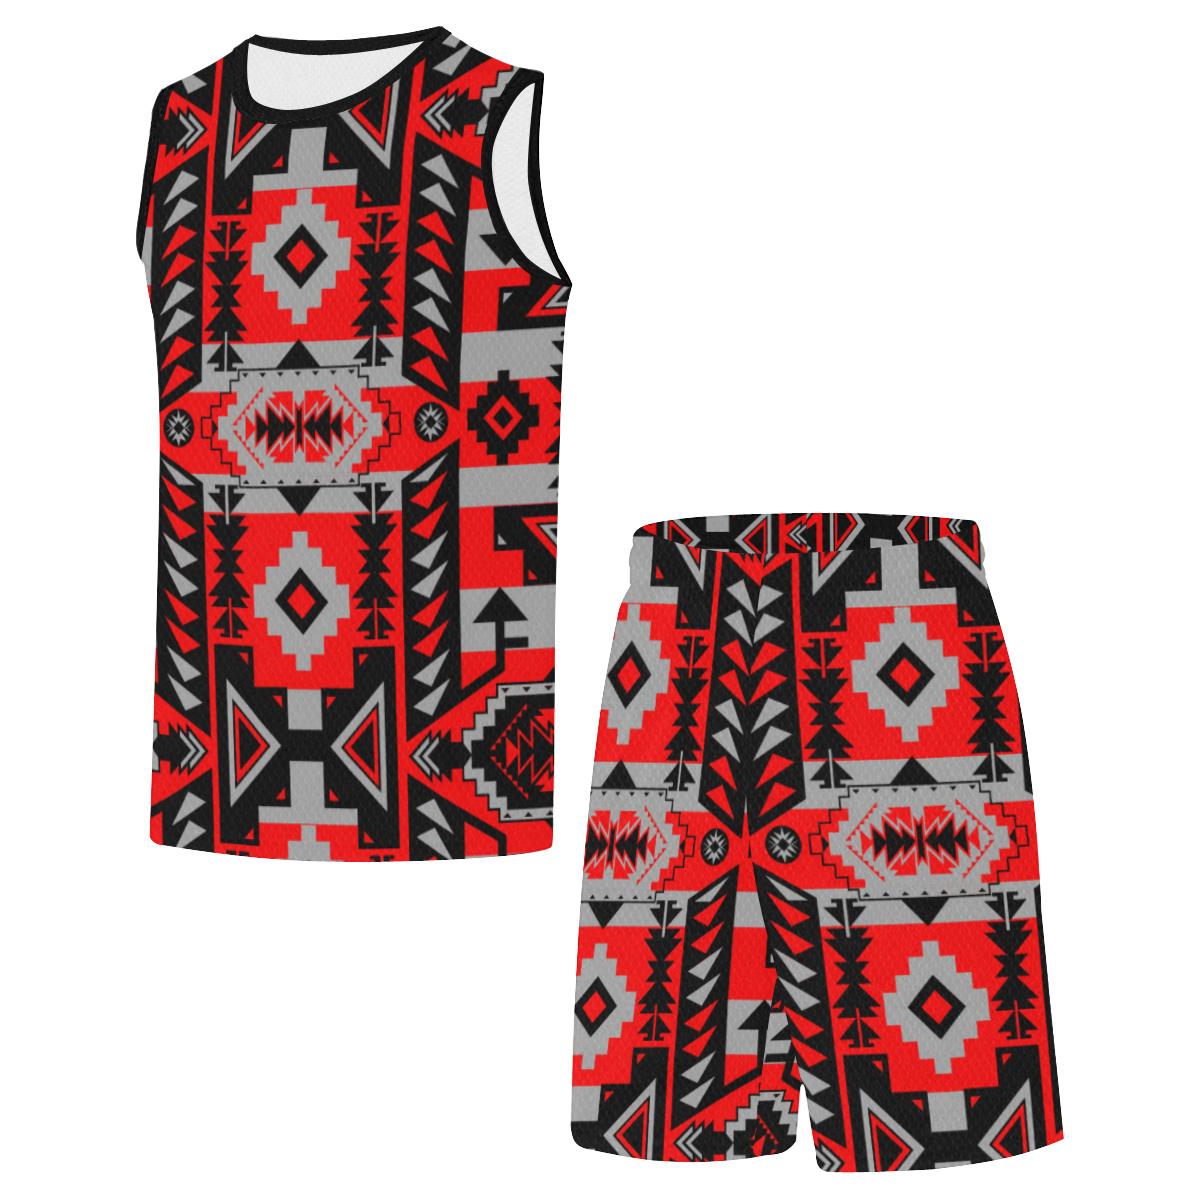 Chiefs Mountain Candy Sierra All Over Print Basketball Uniform Basketball Uniform e-joyer 